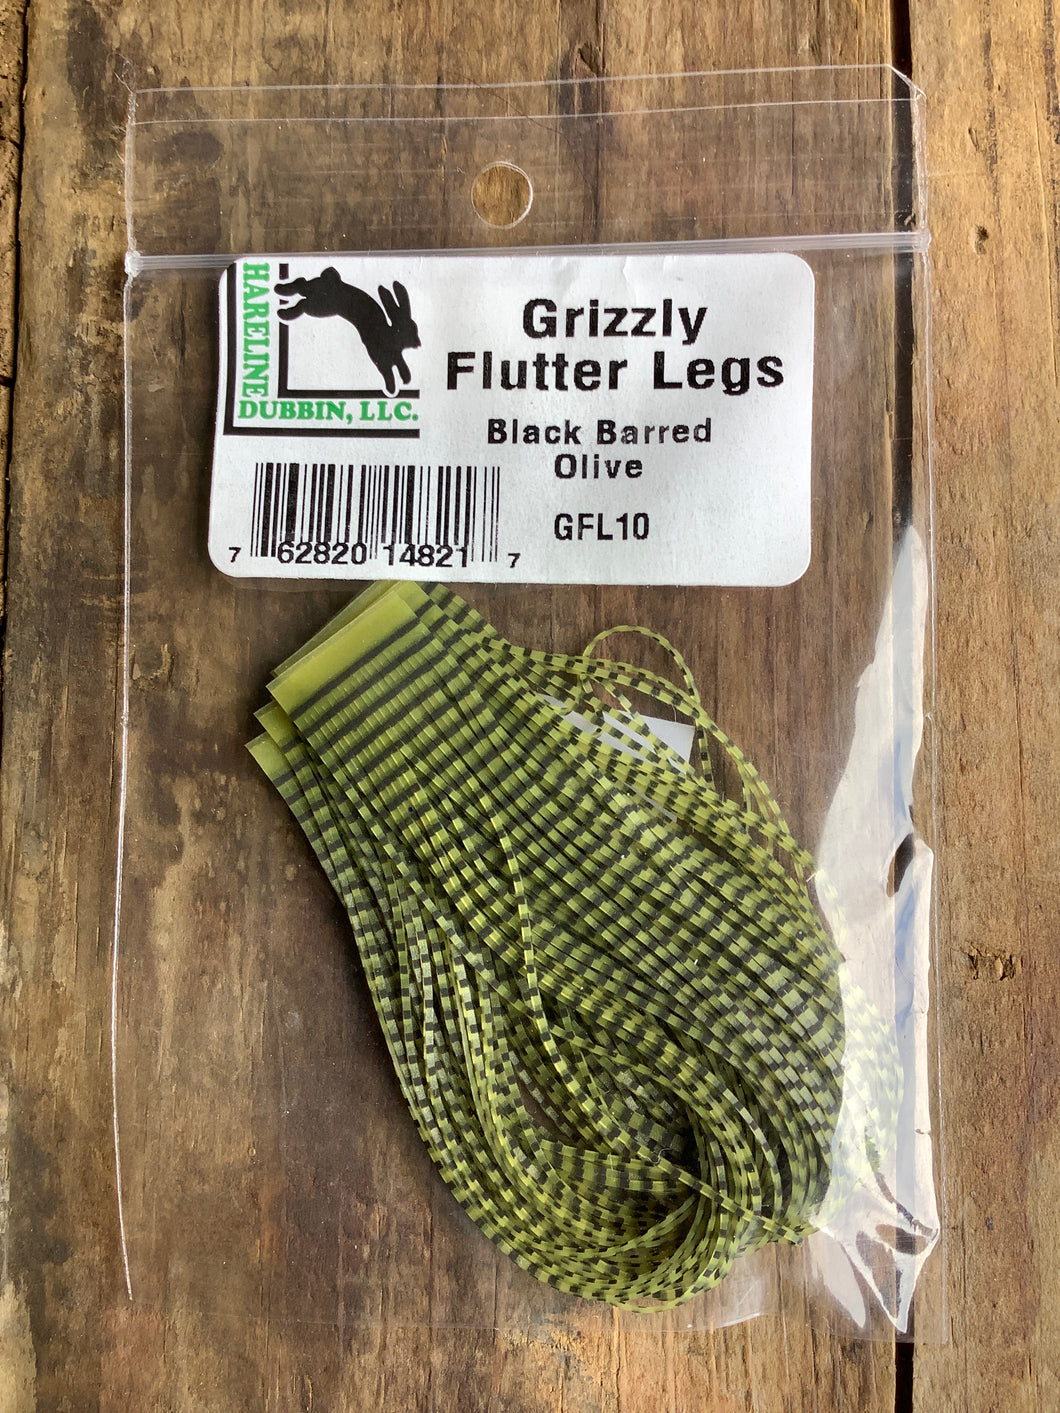 Grizzly Flutter Legs (Rubber legs)